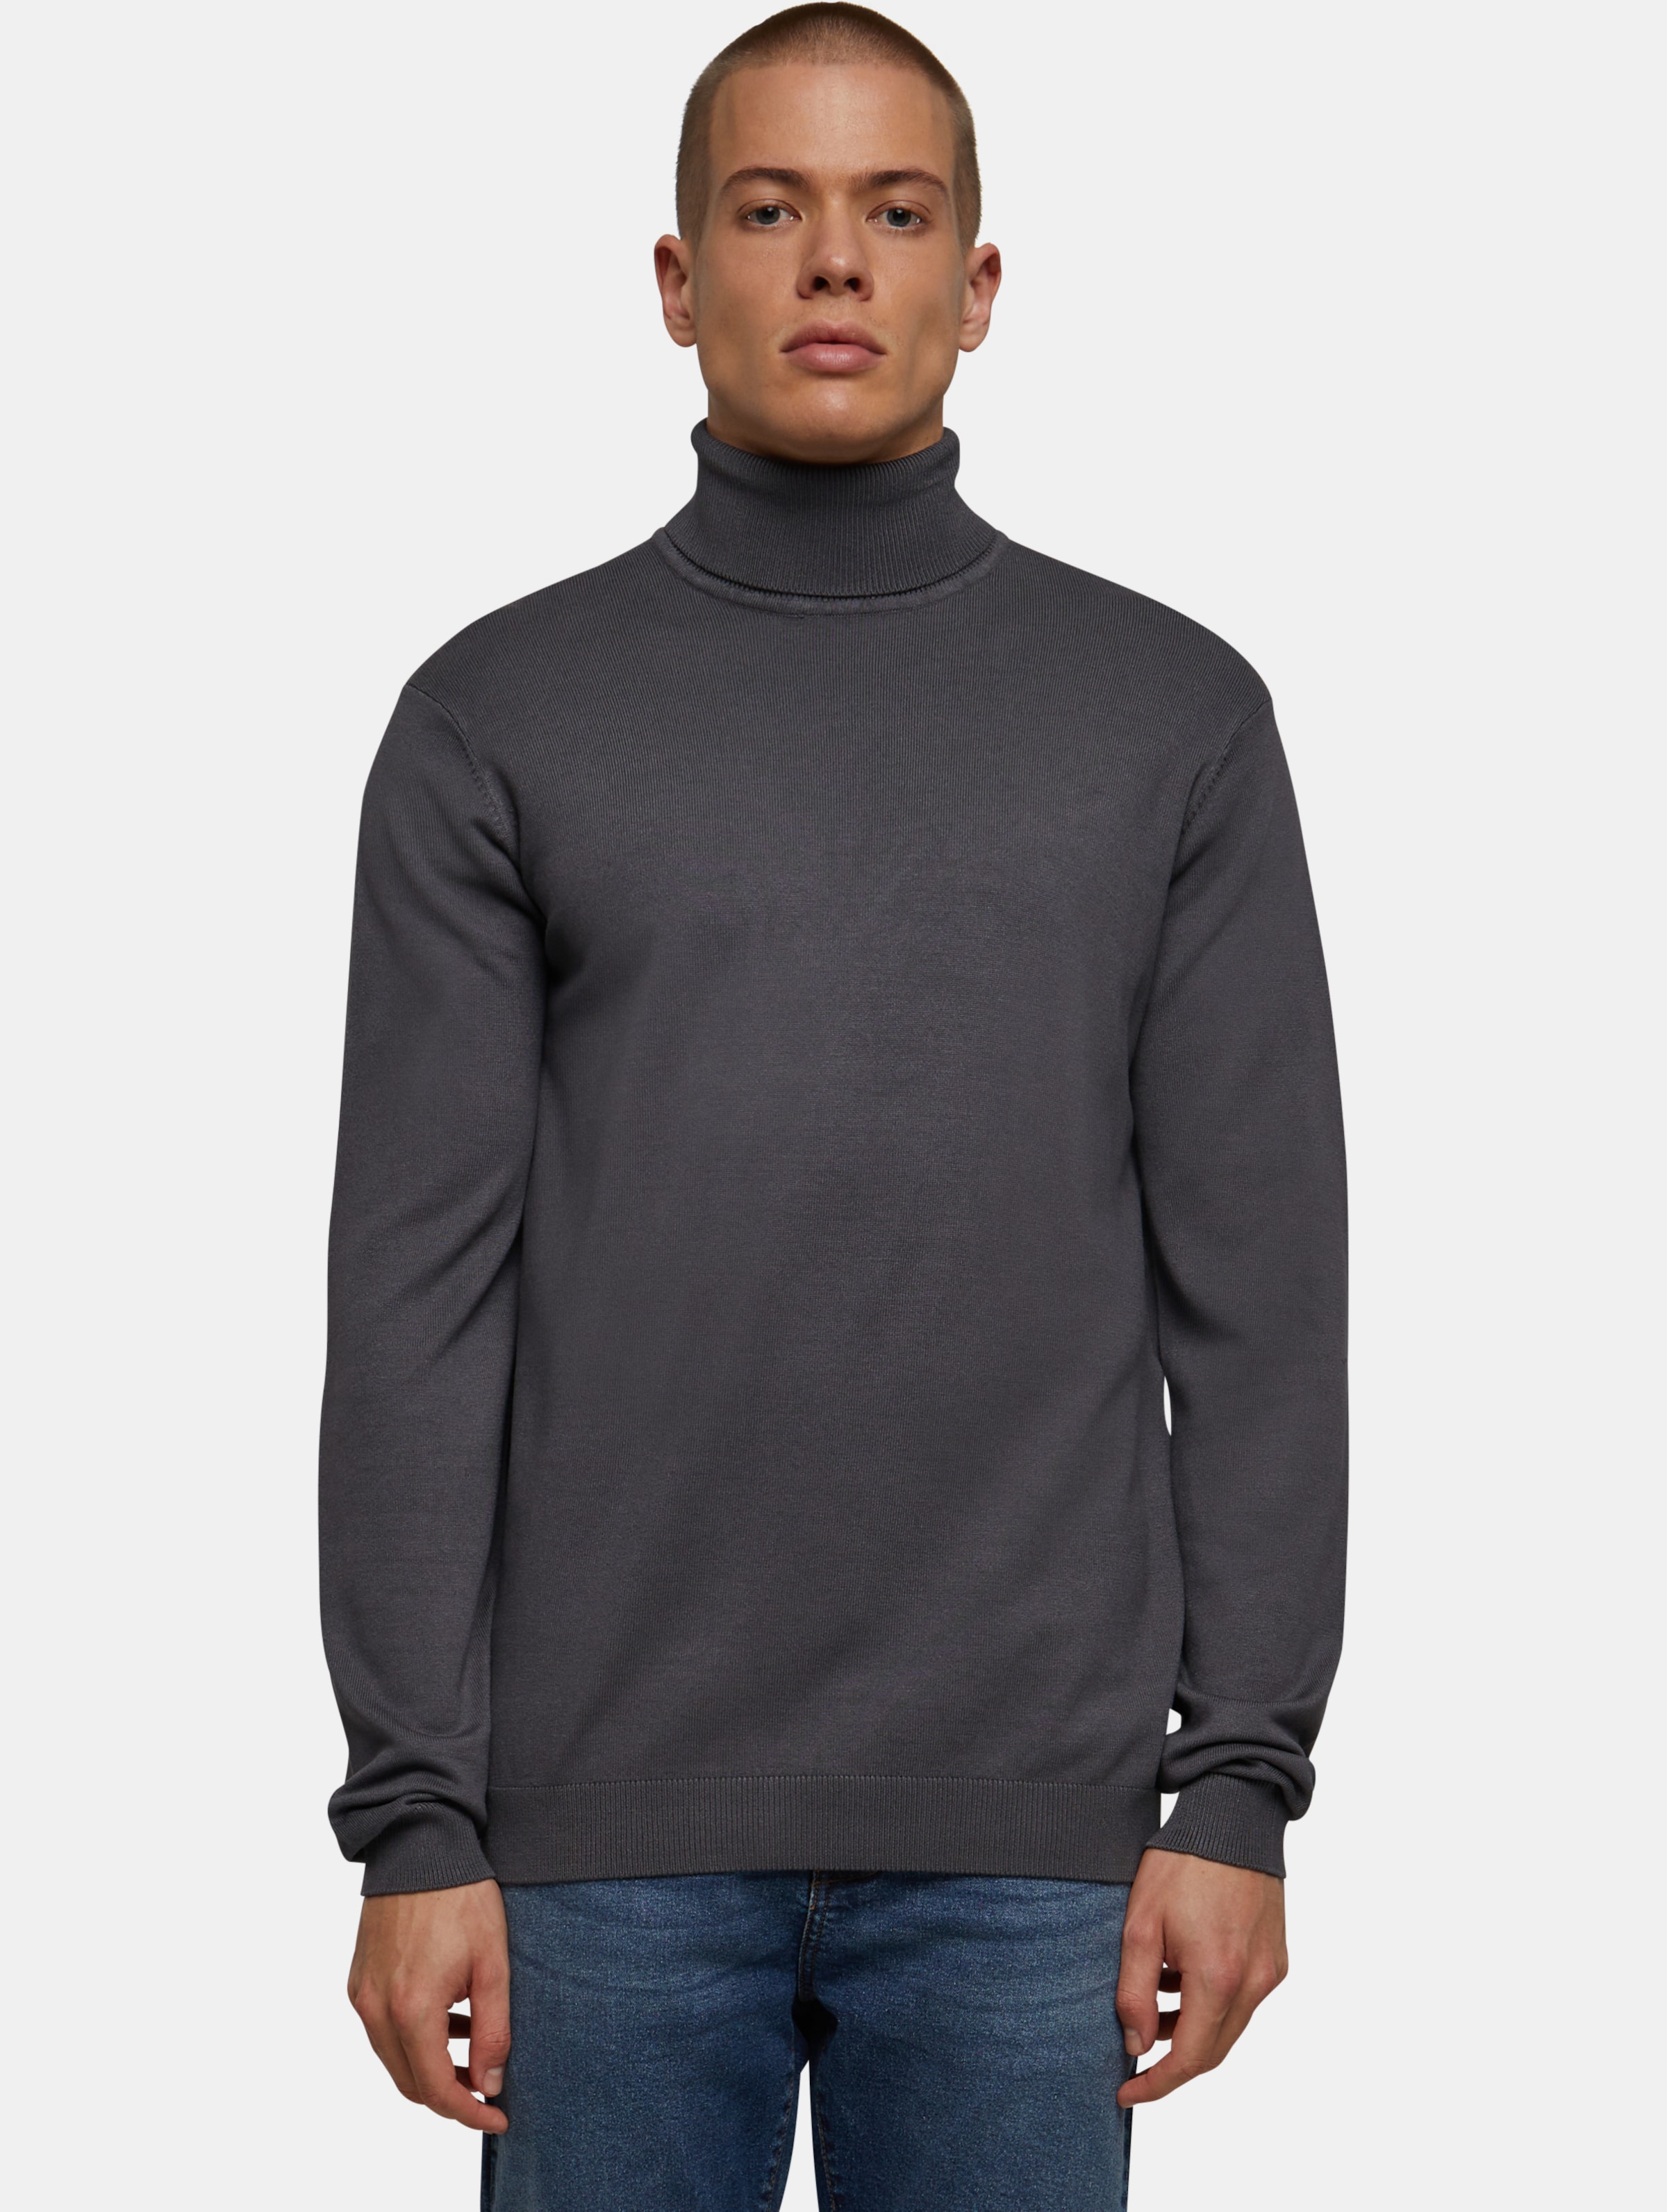 Urban Classics - Knitted Turtleneck Sweater - 3XL - Grijs